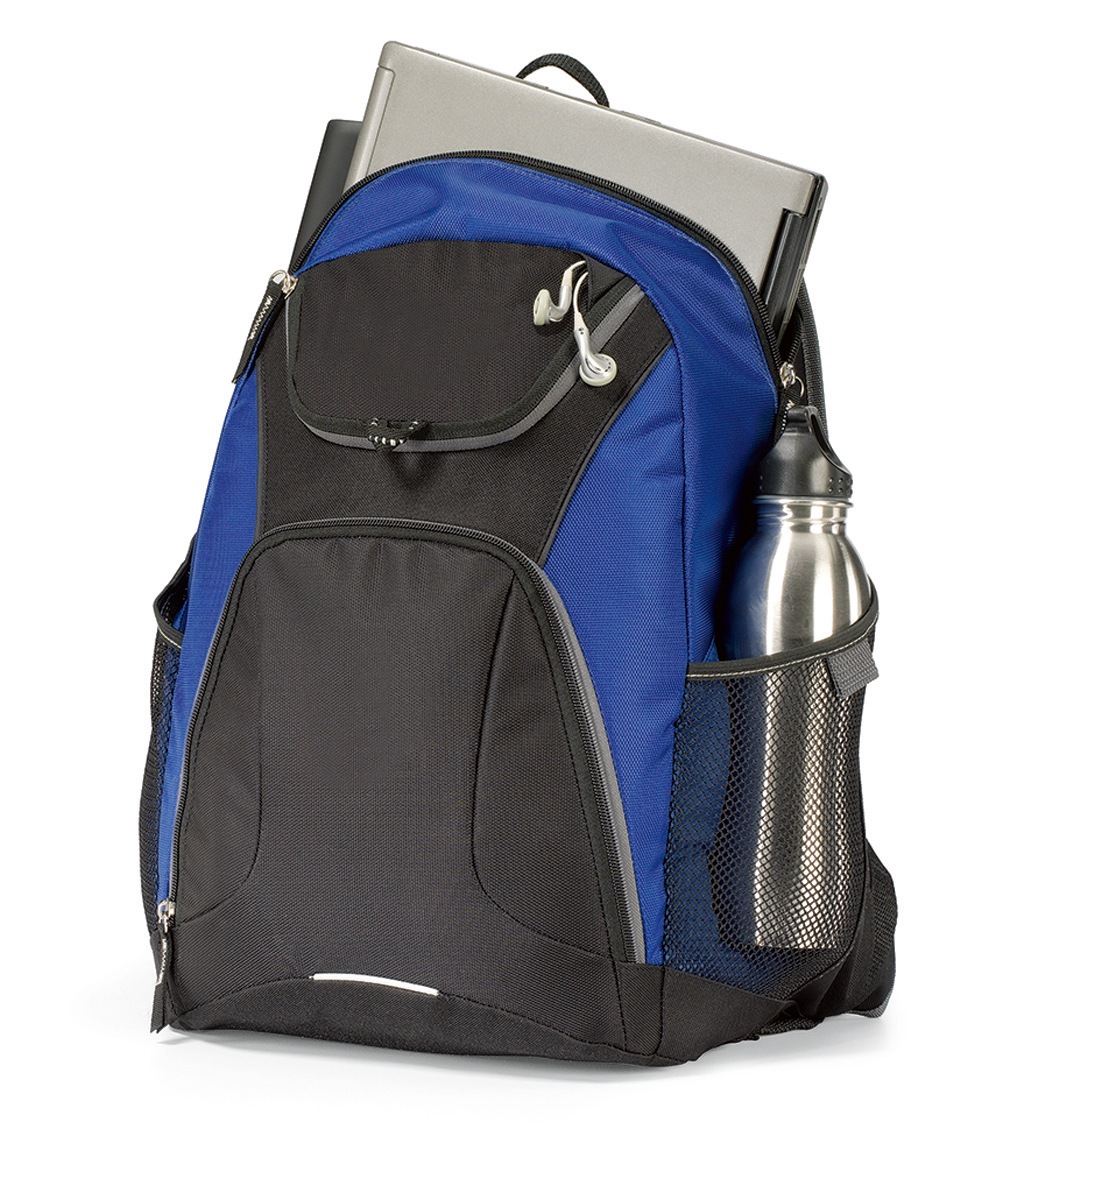 Gemline 5146 - Quest Computer Backpack